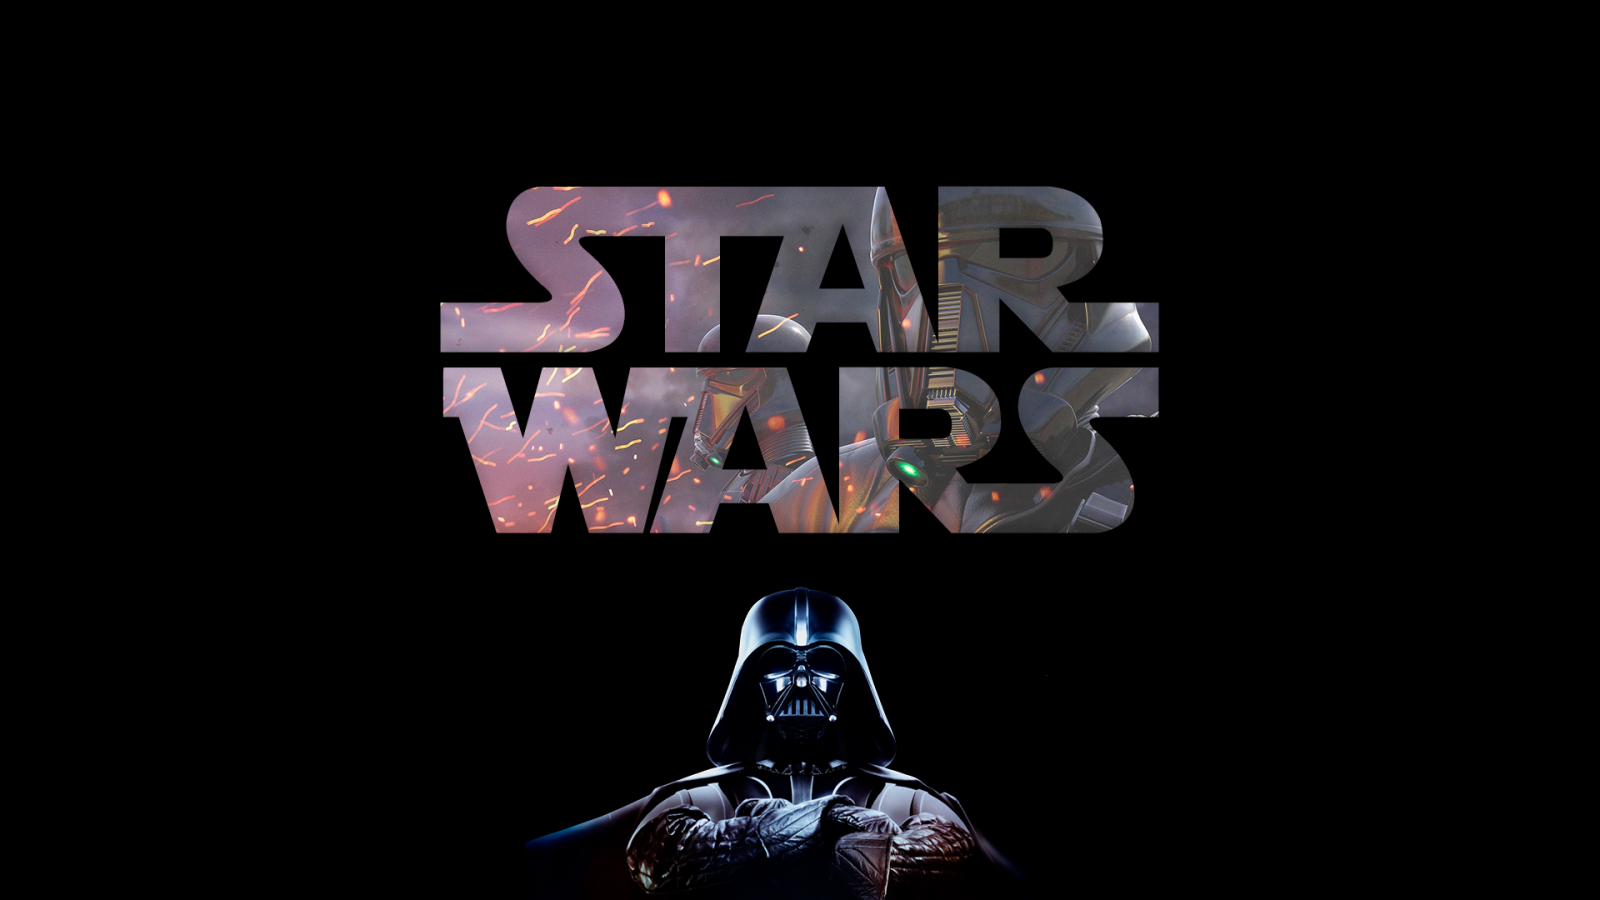 The logo of the film Star Wars Darth Vader